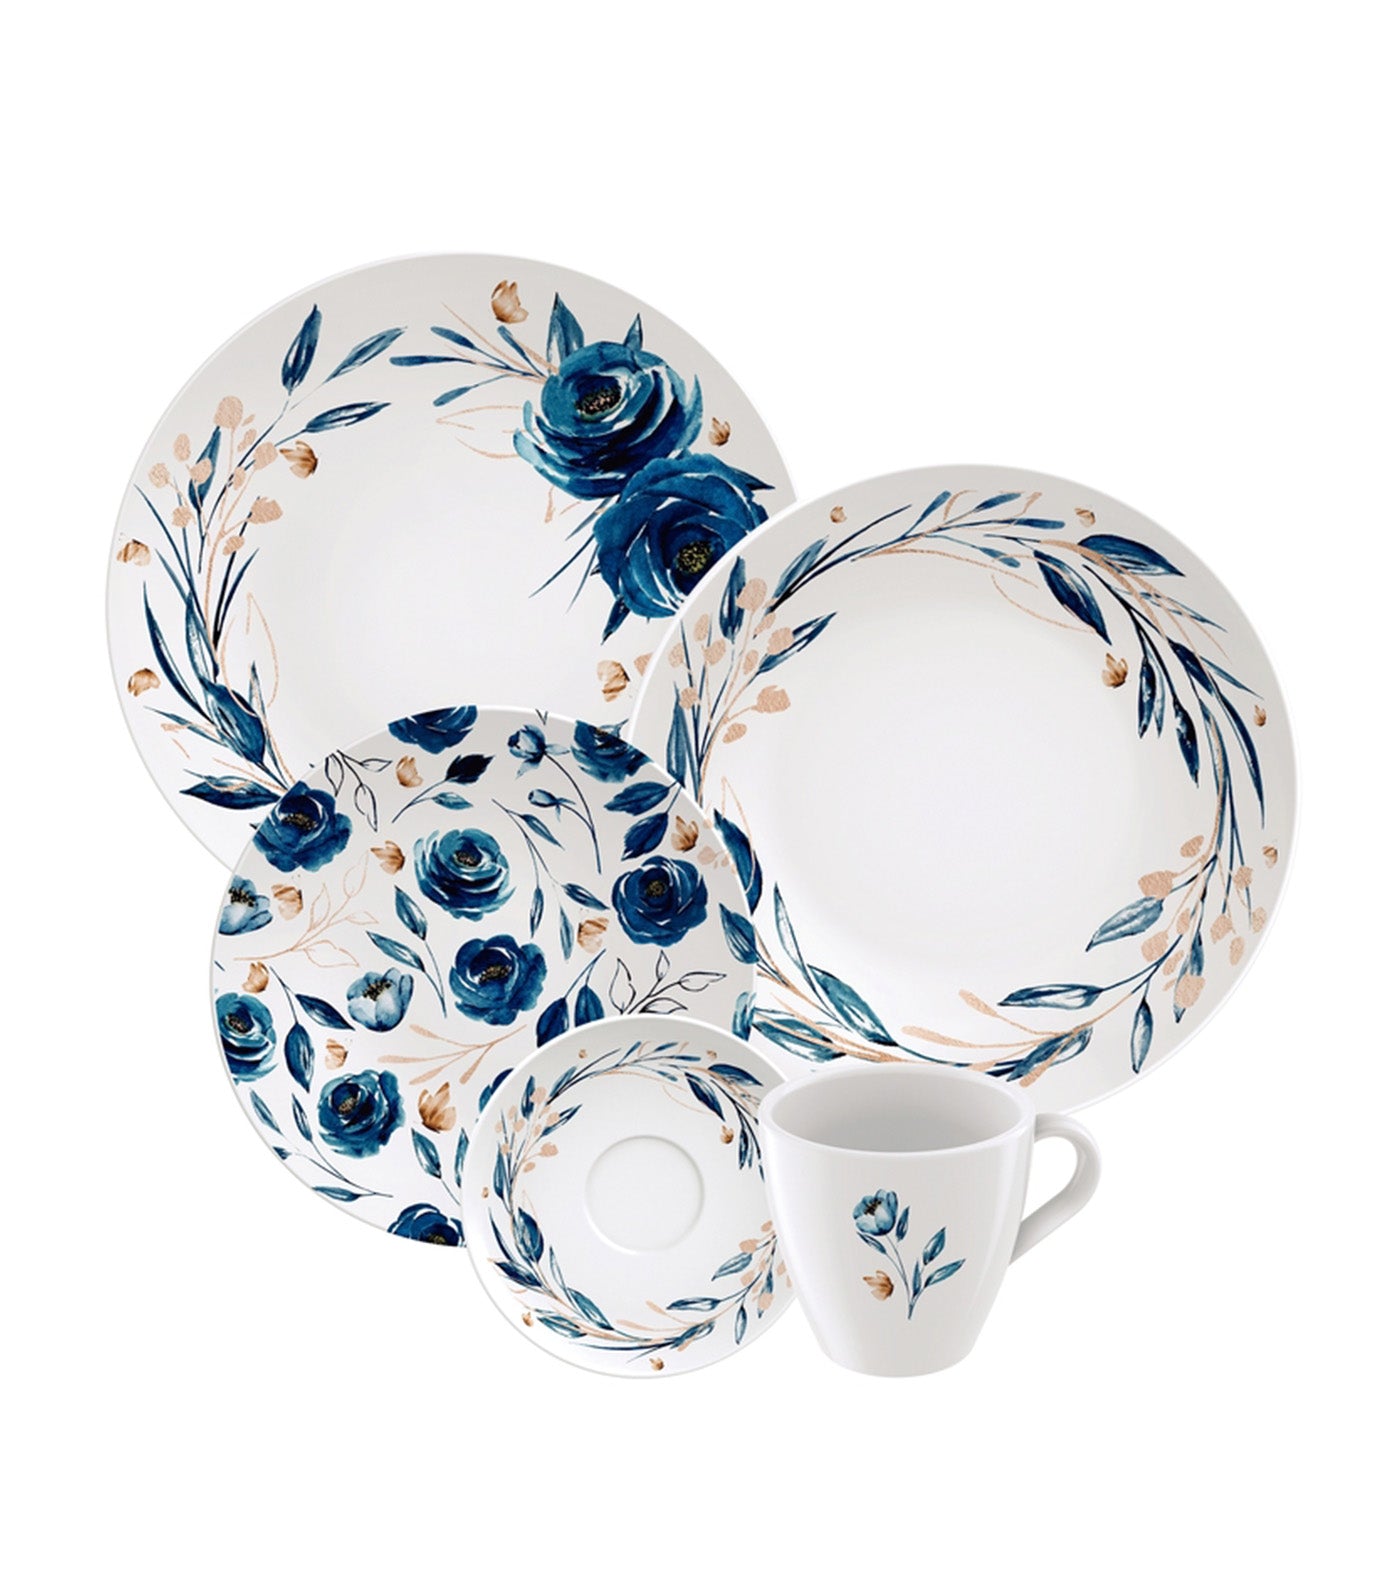 Tramontina Ana Flor Decorated Porcelain Collection 